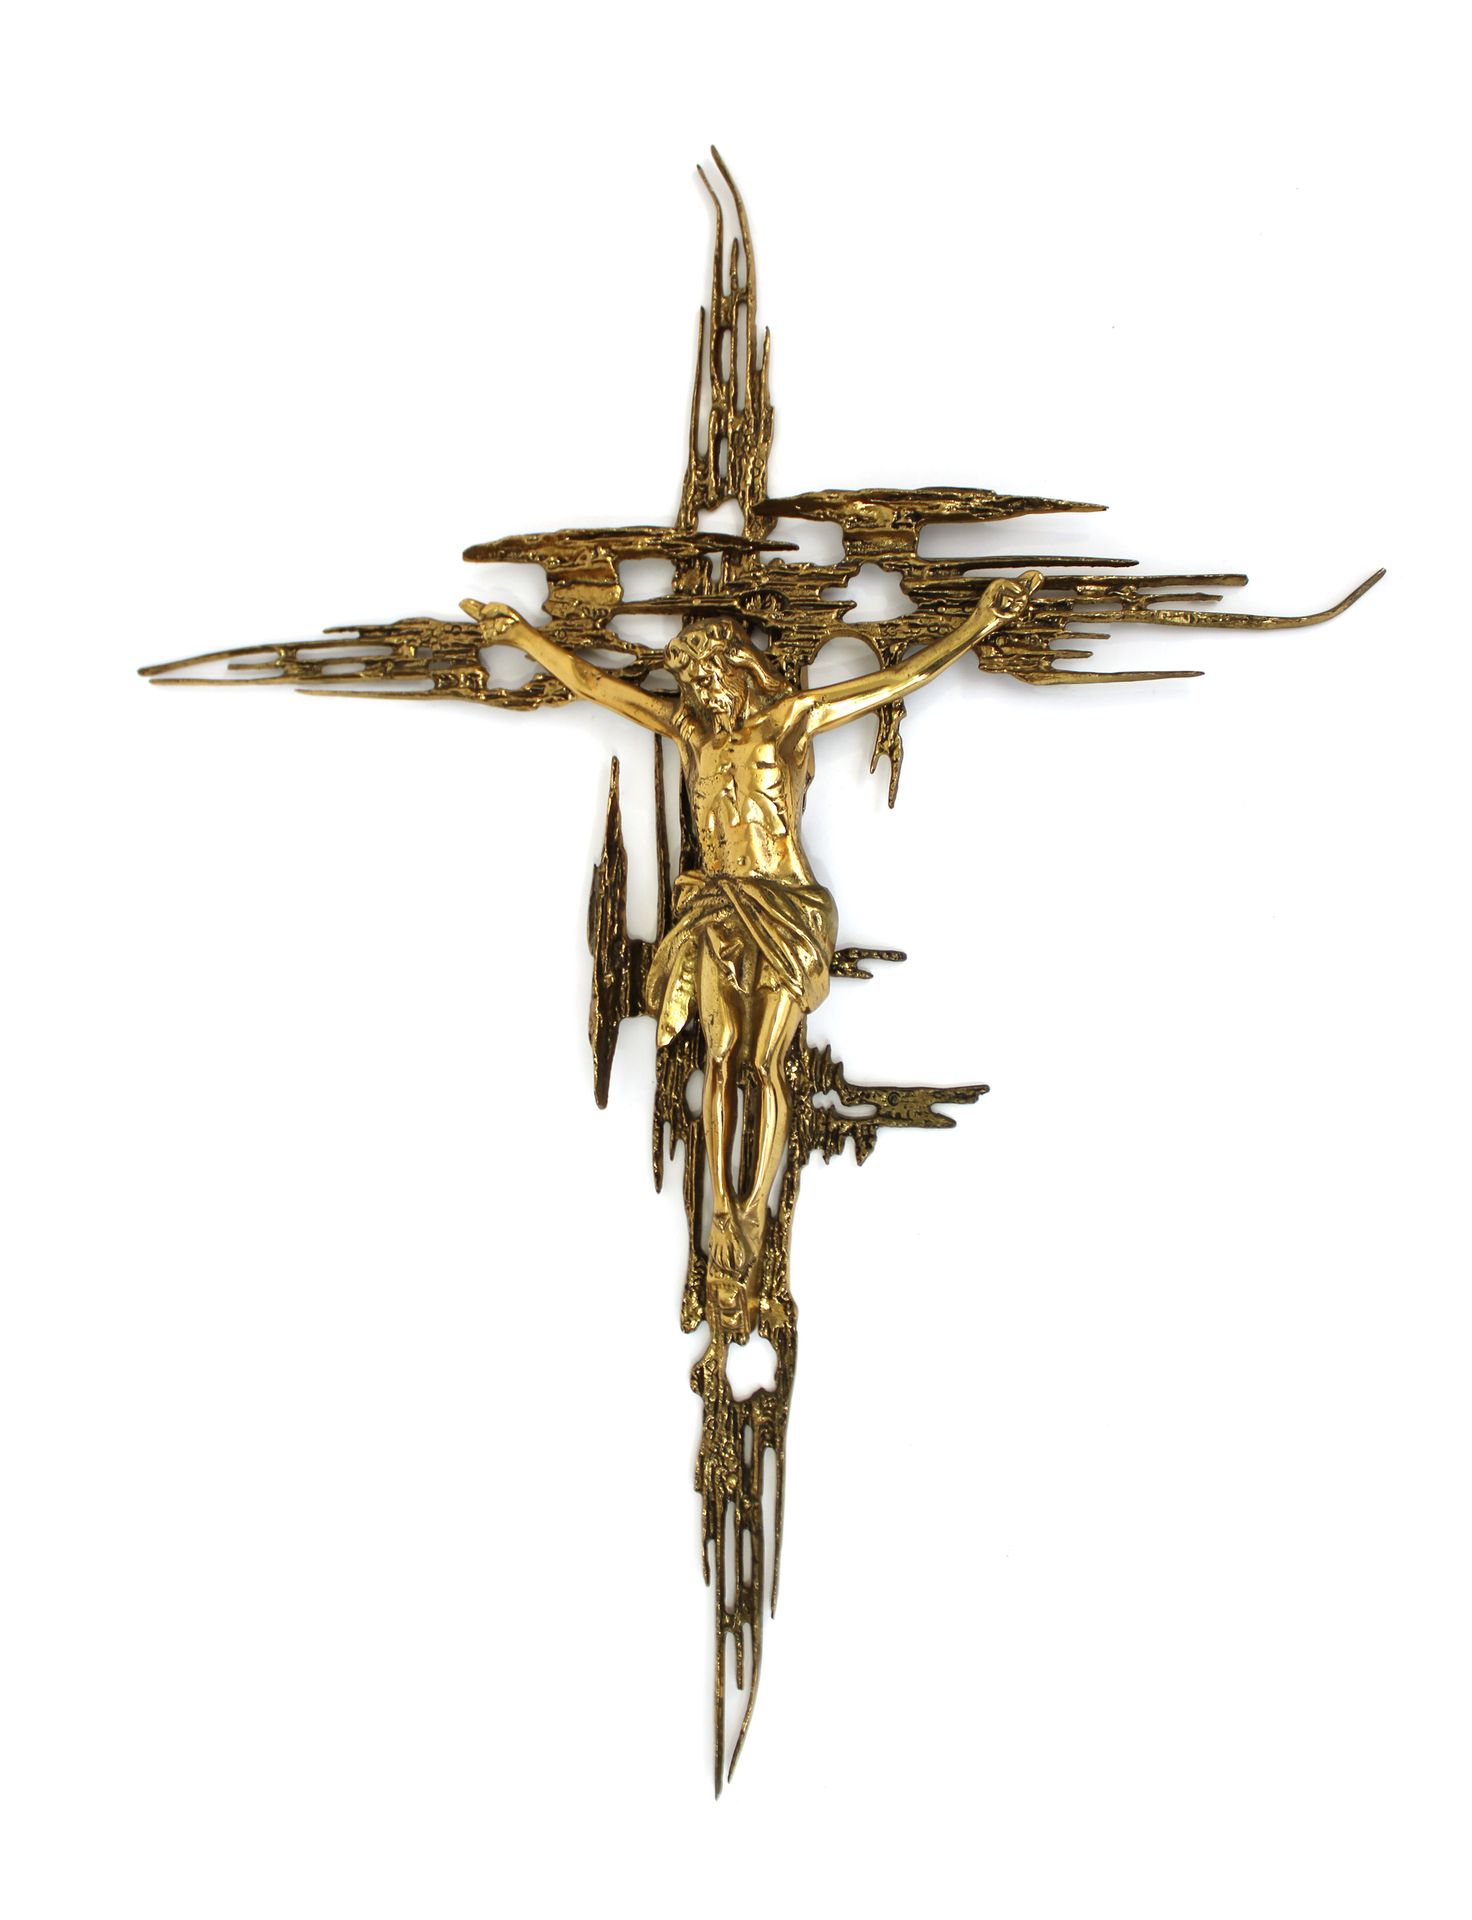 Null Según Salvador DALI
Crucifijo en bronce dorado
77 x 60 cm